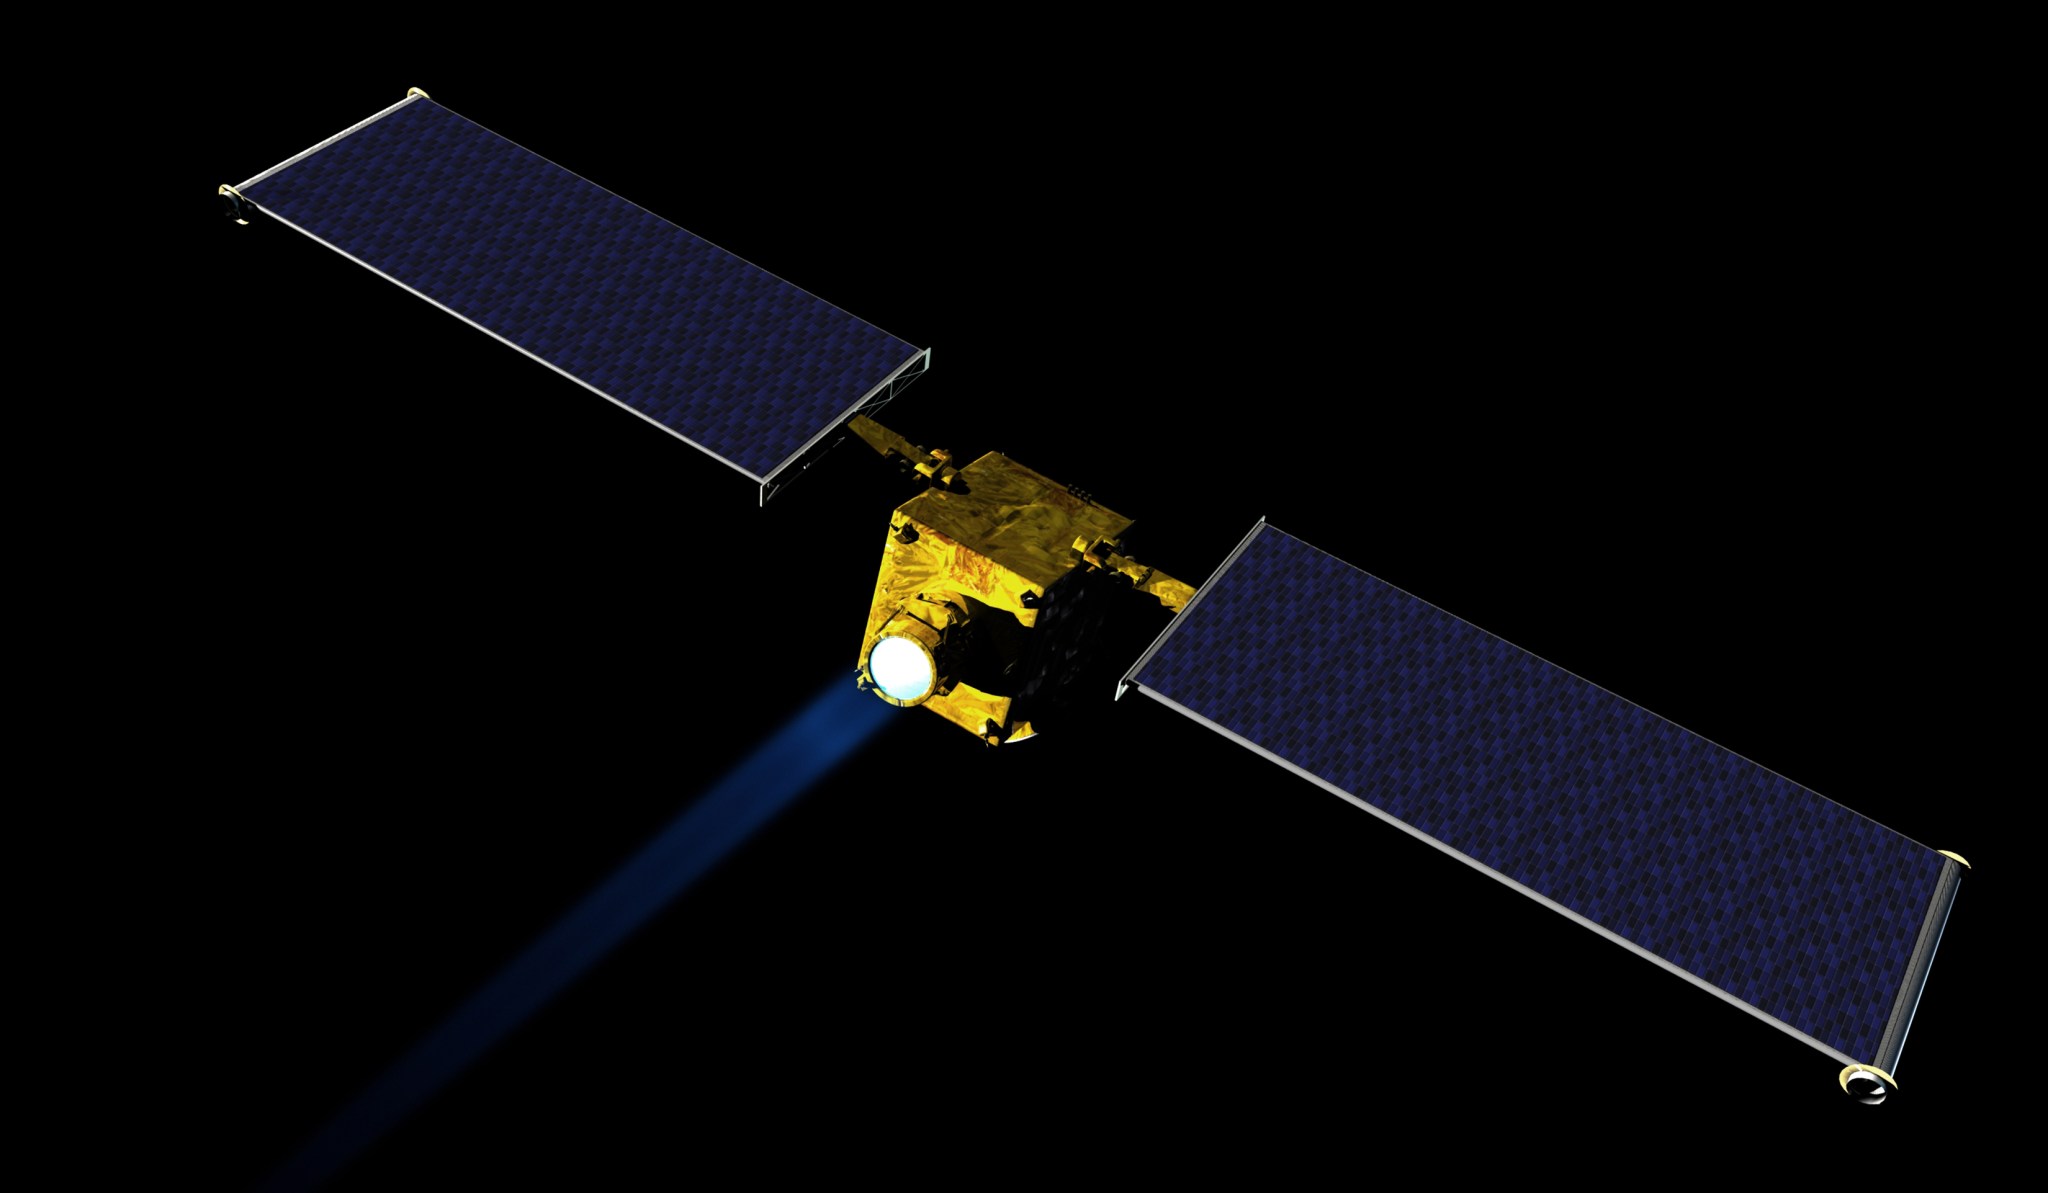 NASA’s Double Asteroid Redirection Test (DART) spacecraft